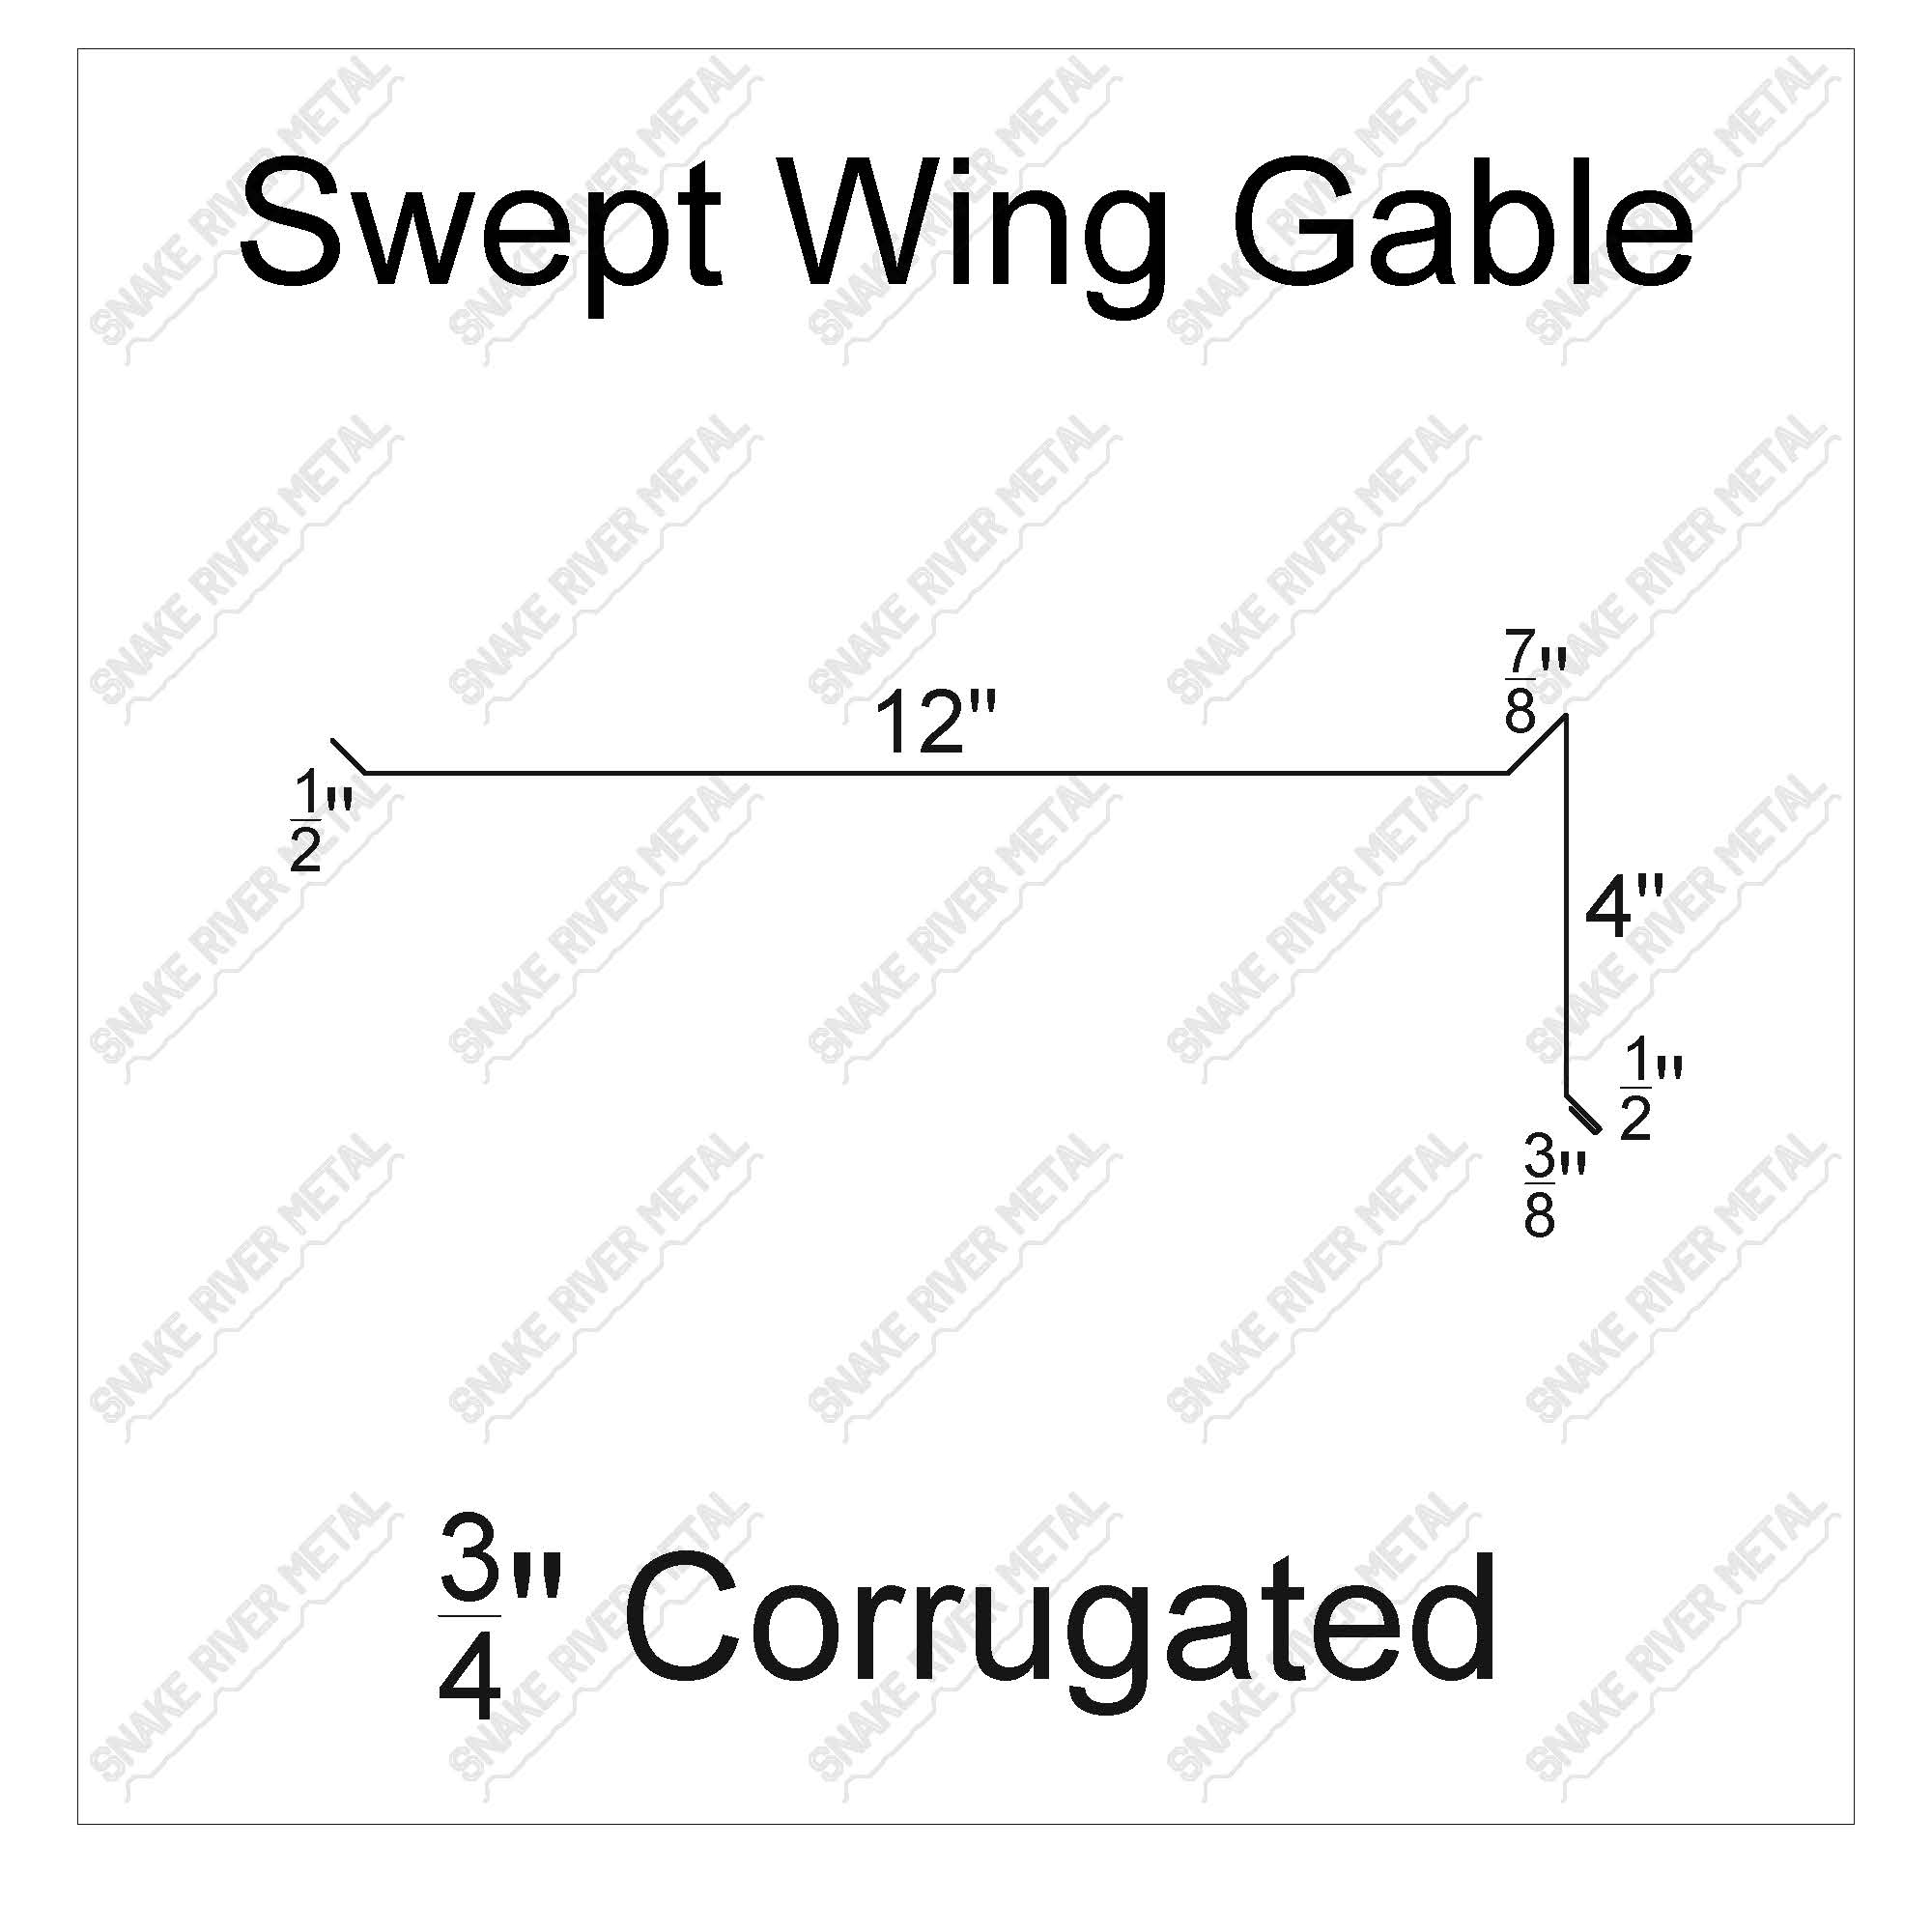 Swept Wing Gable - Corrugated Trim